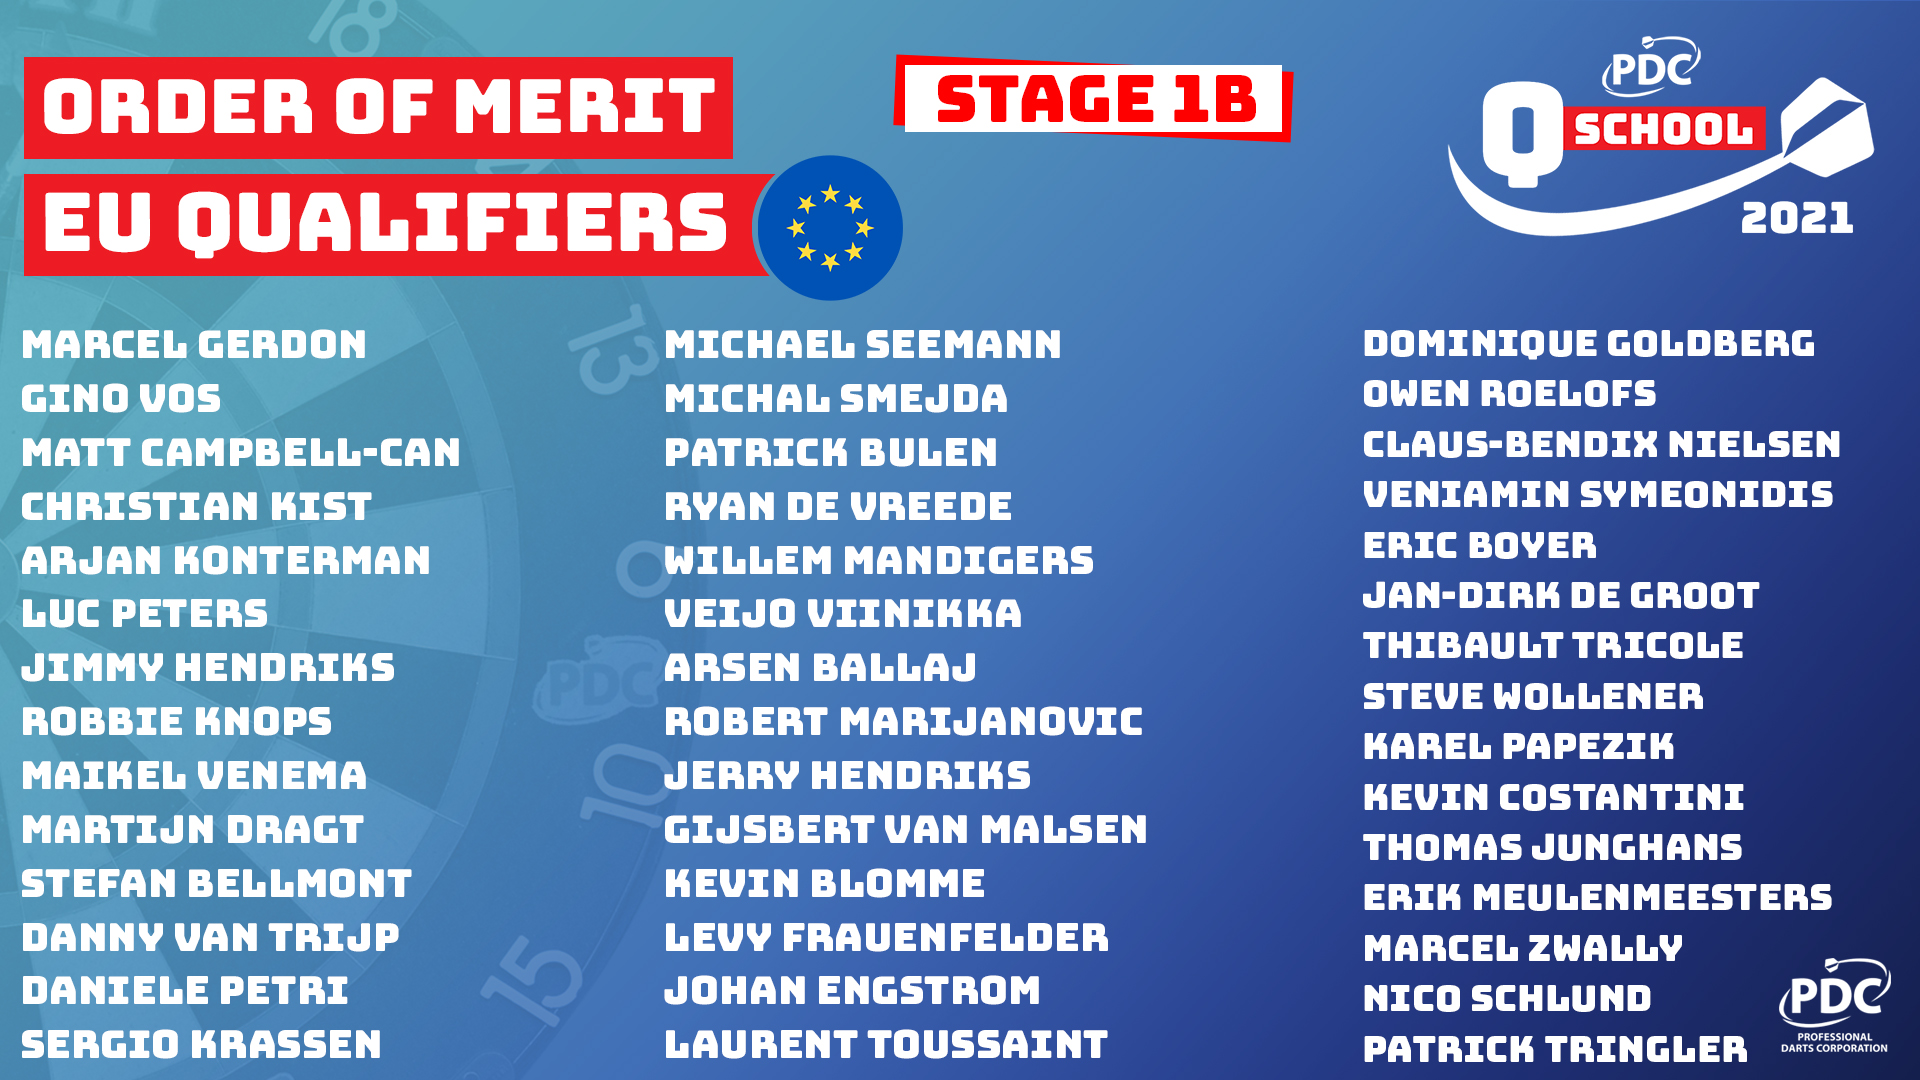 European Stage 1B Order of Merit Qualifiers